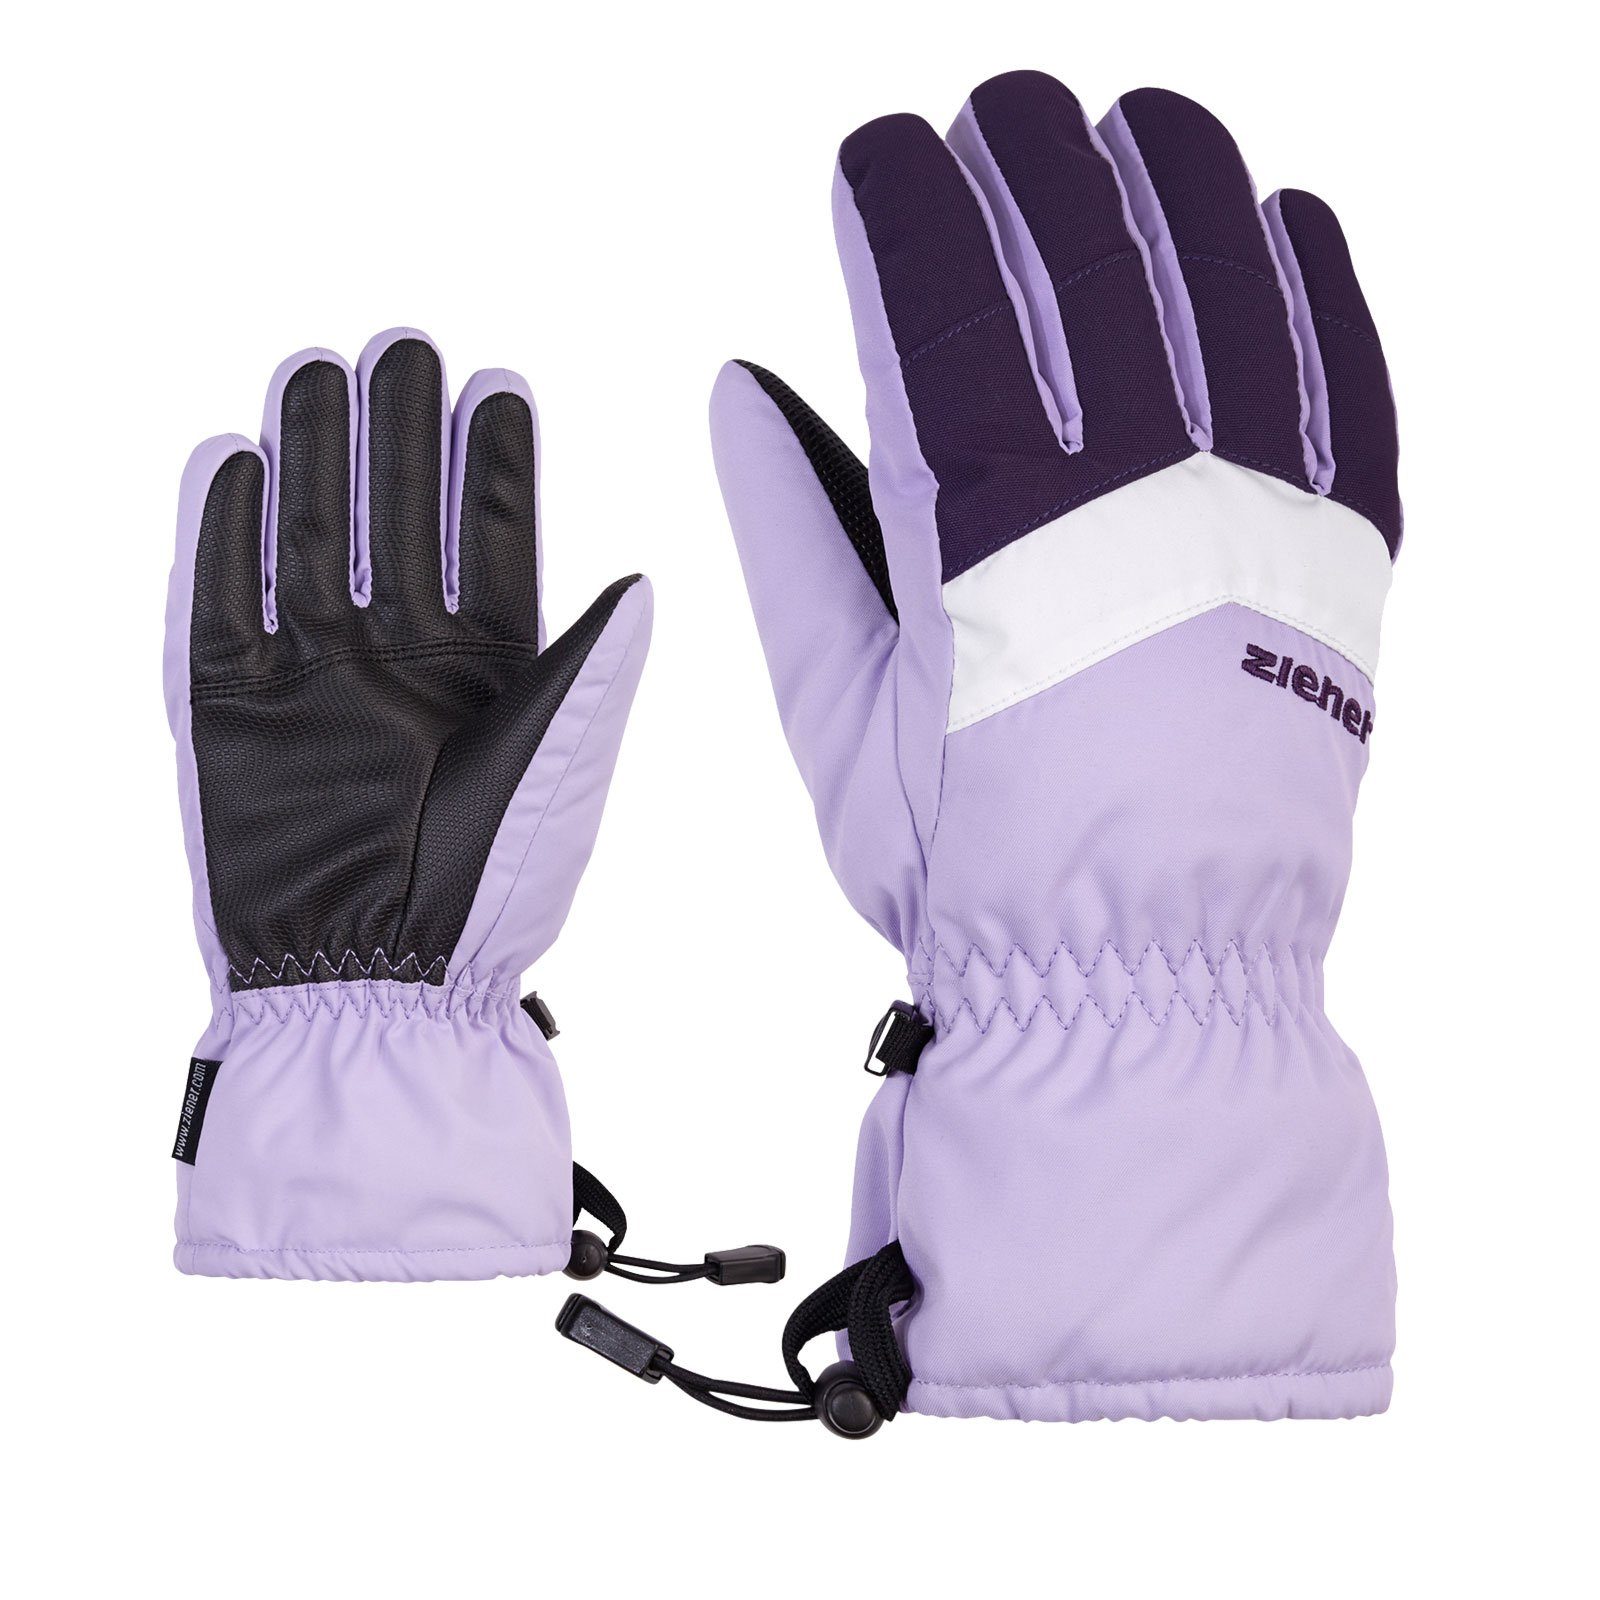 Ziener Skihandschuhe LETT AS® mit gesticktem Markenschriftzug auf dem Handrücken 550 sweet lilac